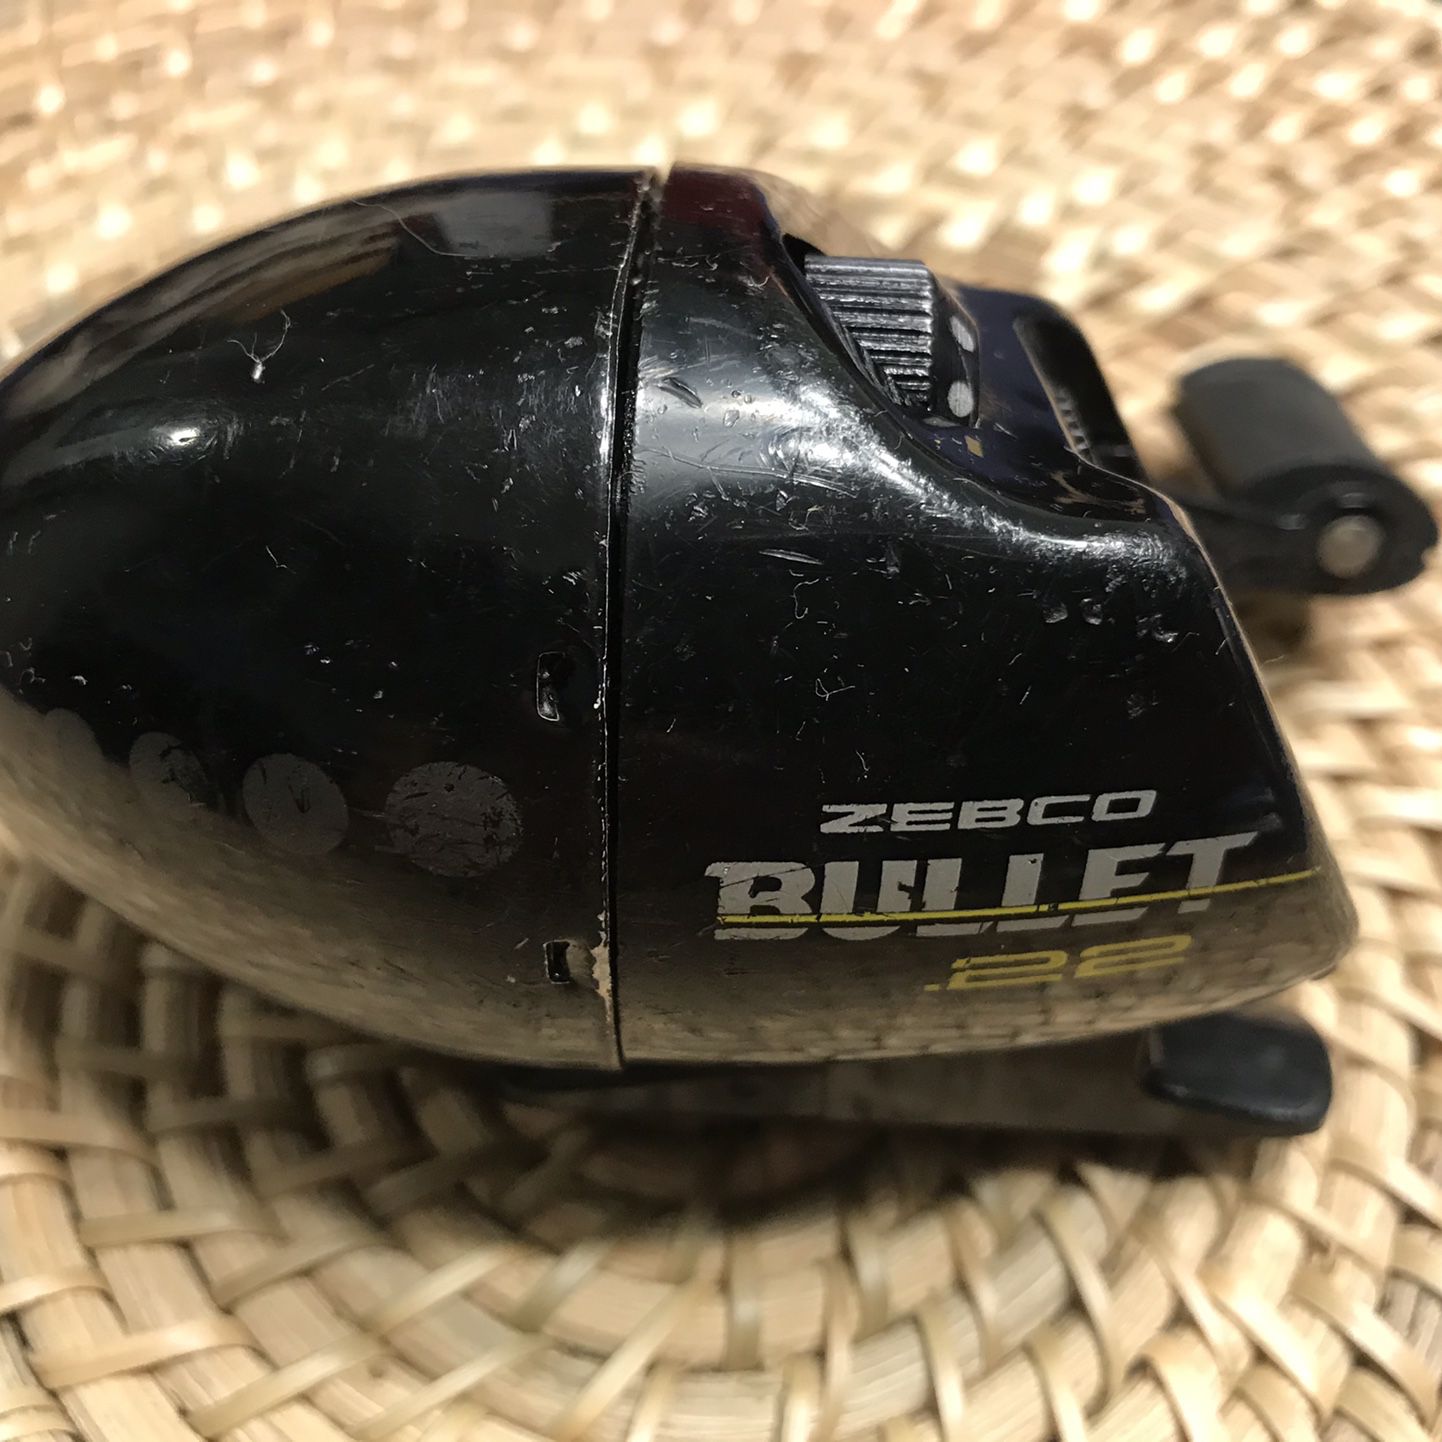 Zebco .22 Bullet Reel for Sale in Elk Grove Village, IL - OfferUp